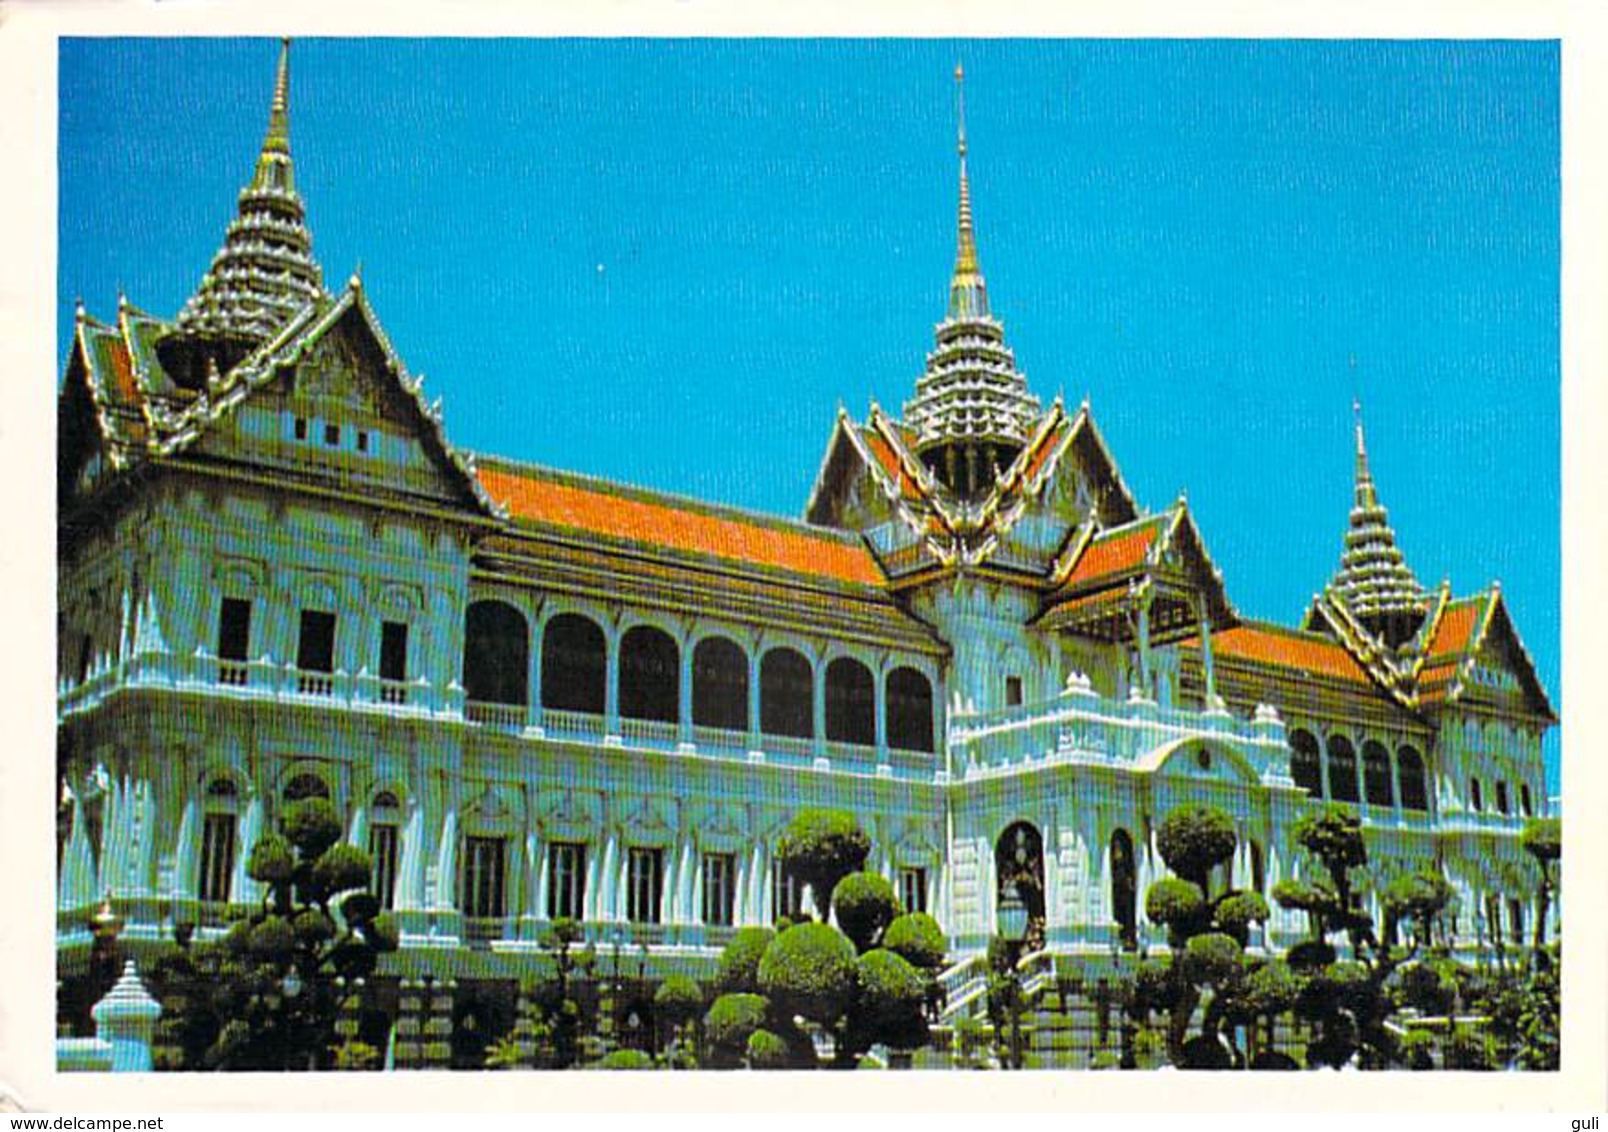 Asie  THAILAND Thaïlande   Lot de 24 cartes Cpm -scans R / V  24 cartes - TIMBRE STAMP THAILAND